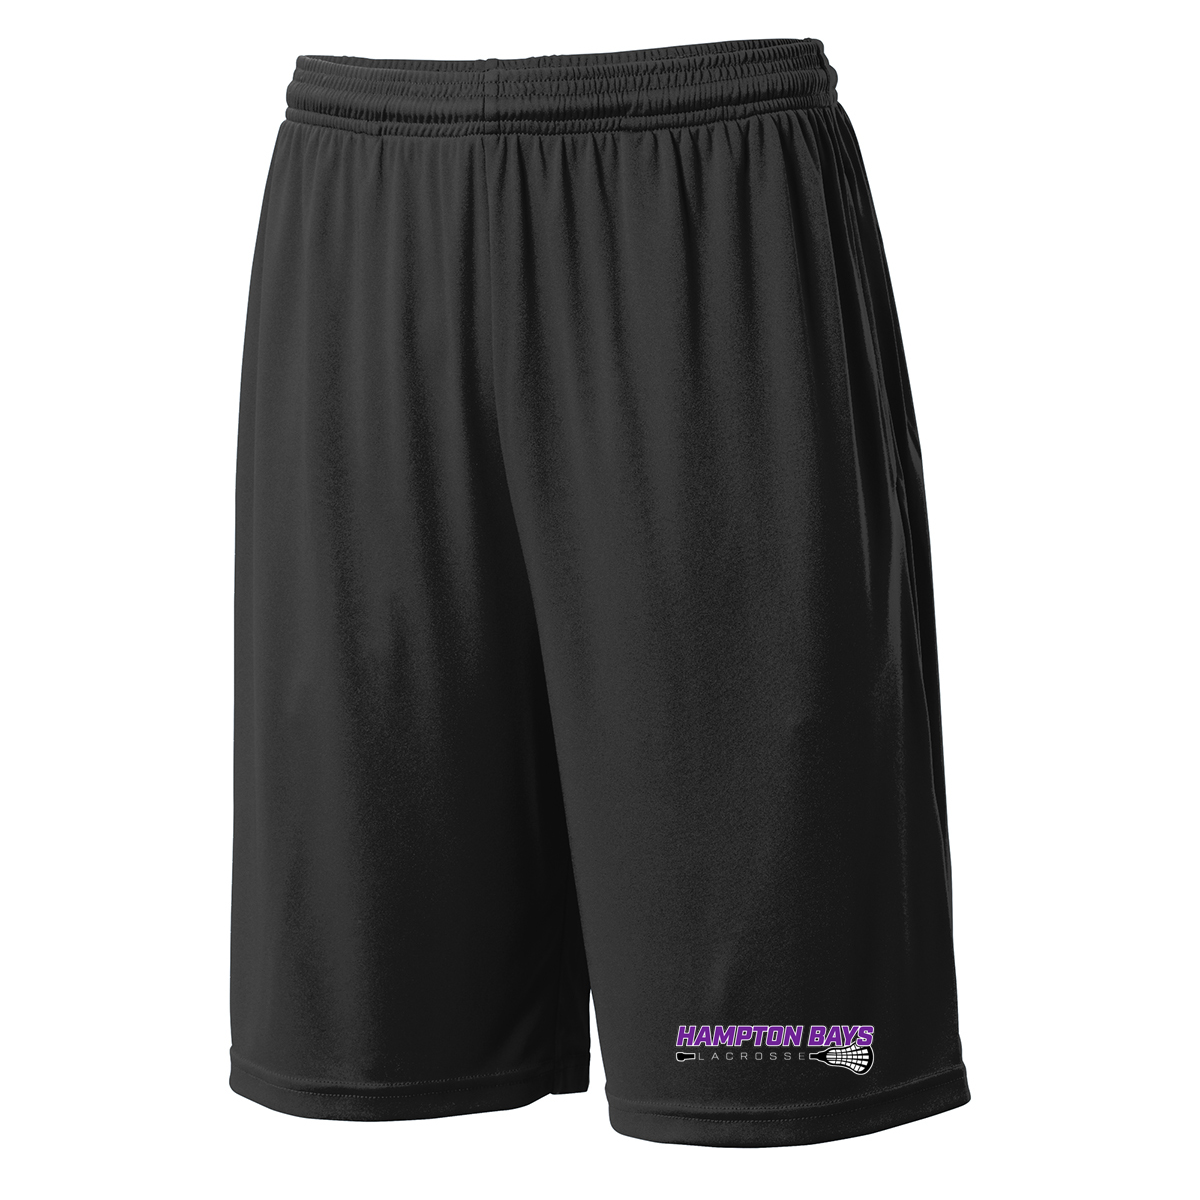 Hampton Bays Lacrosse Shorts